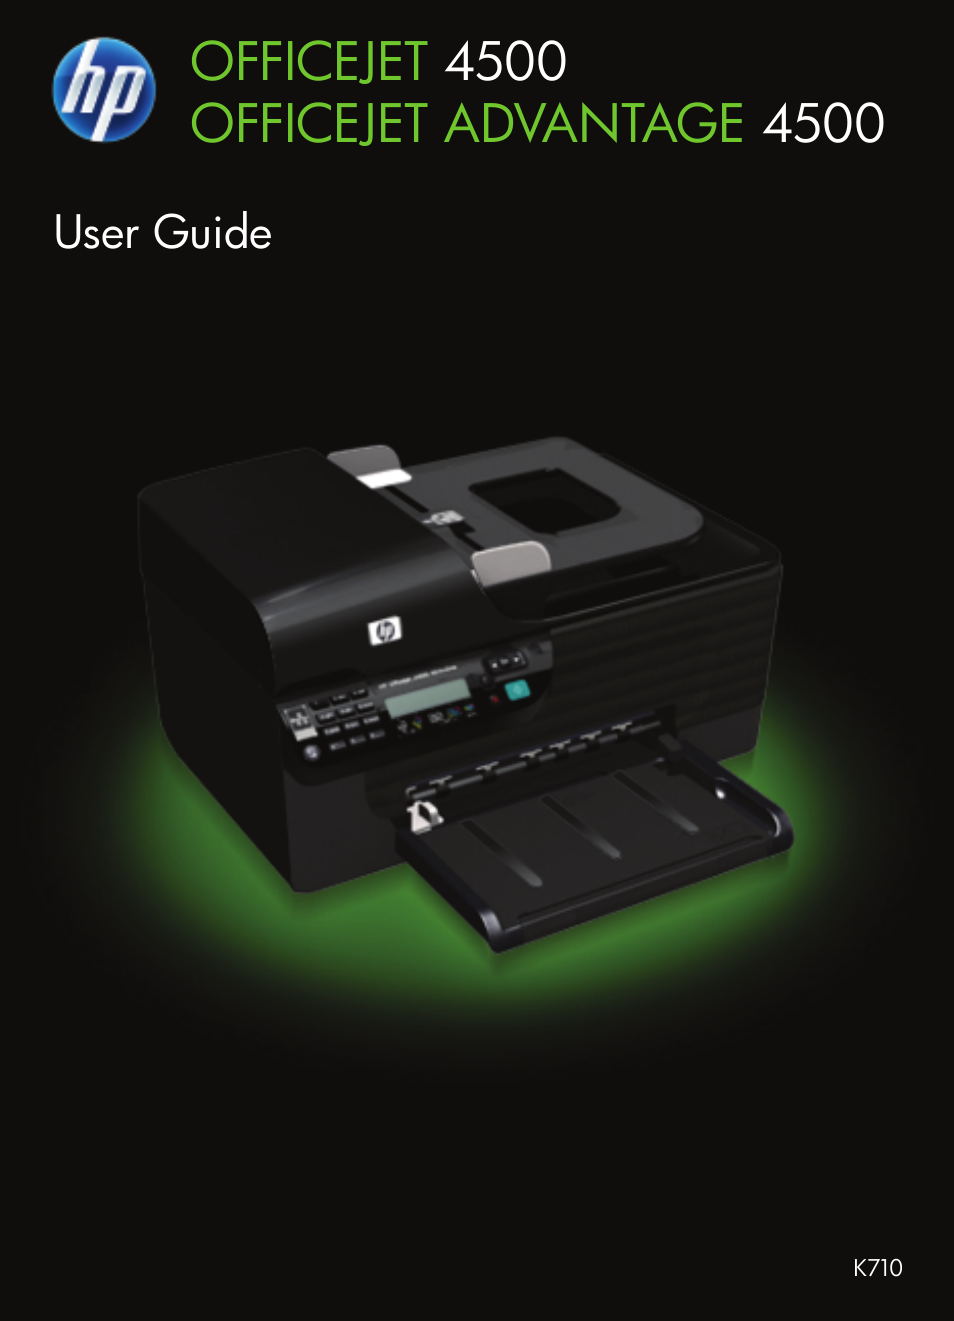 HP OFFICEJET 4500 User Manual | 228 pages | Also for: Officejet 4575  (K710a), Officejet Advantage 4500 (K710)